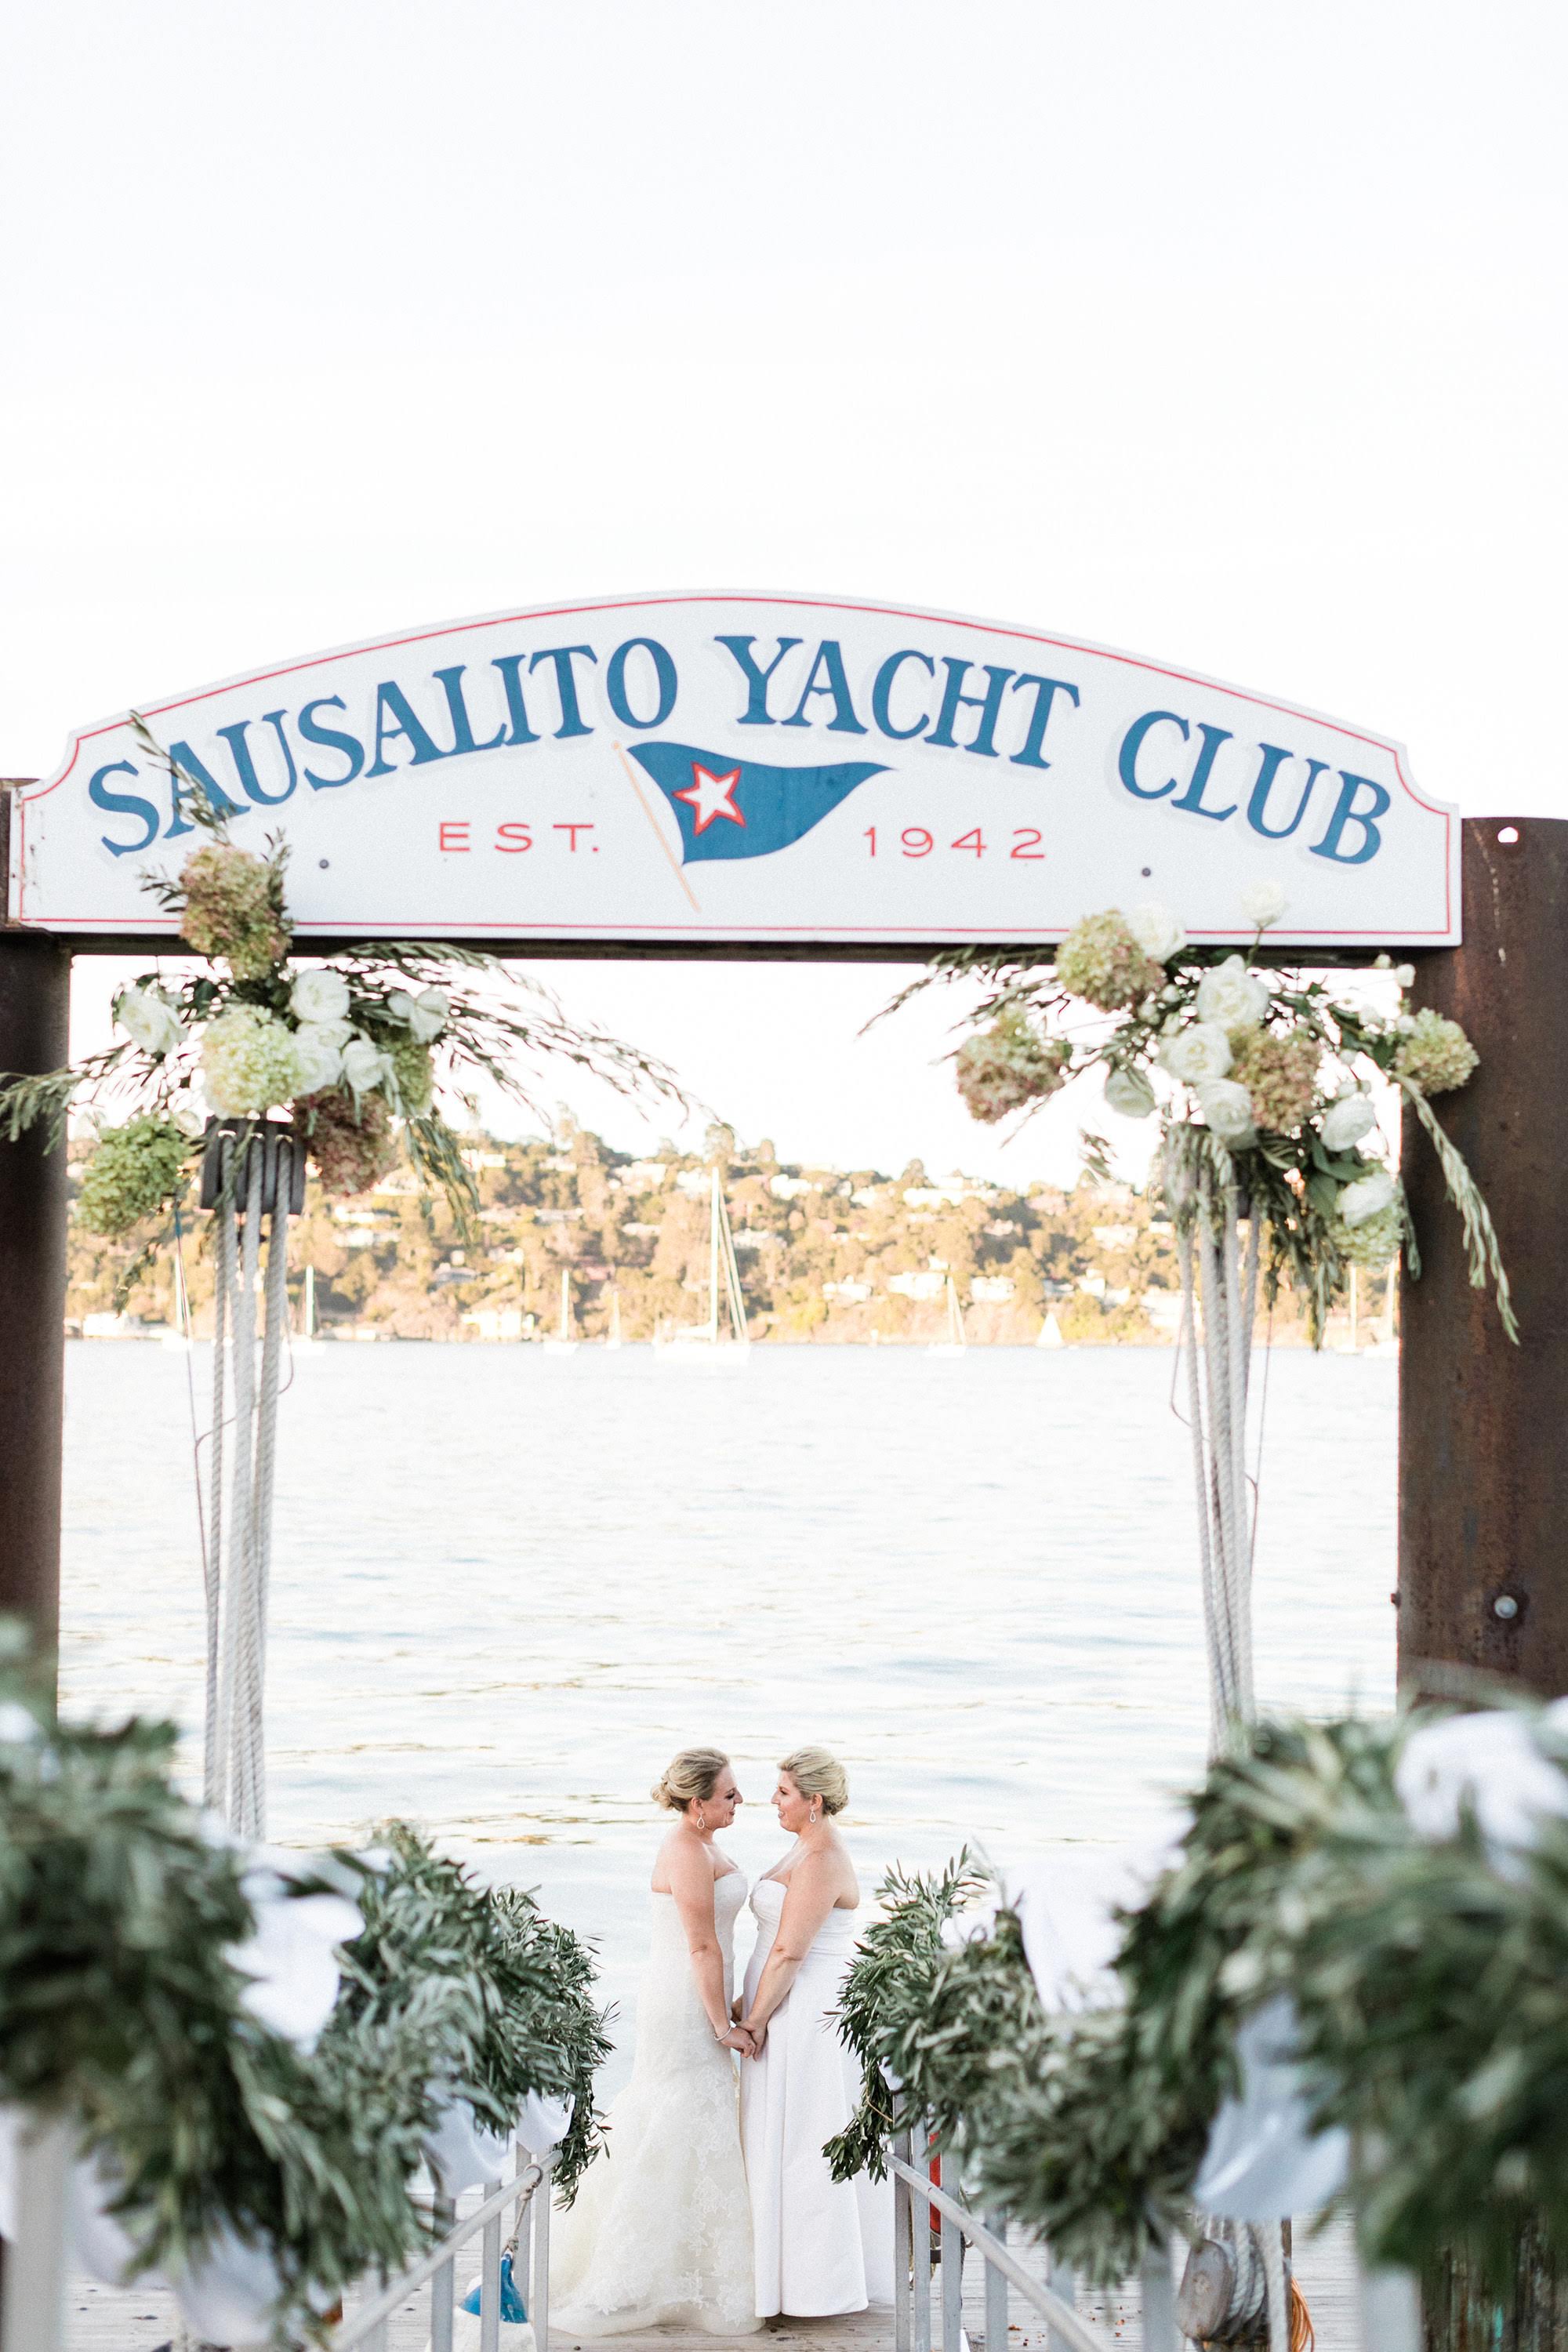 092218_AK_Sausalito-Yacht-Club-Wedding_Buena-Lane-Photography_351.jpg